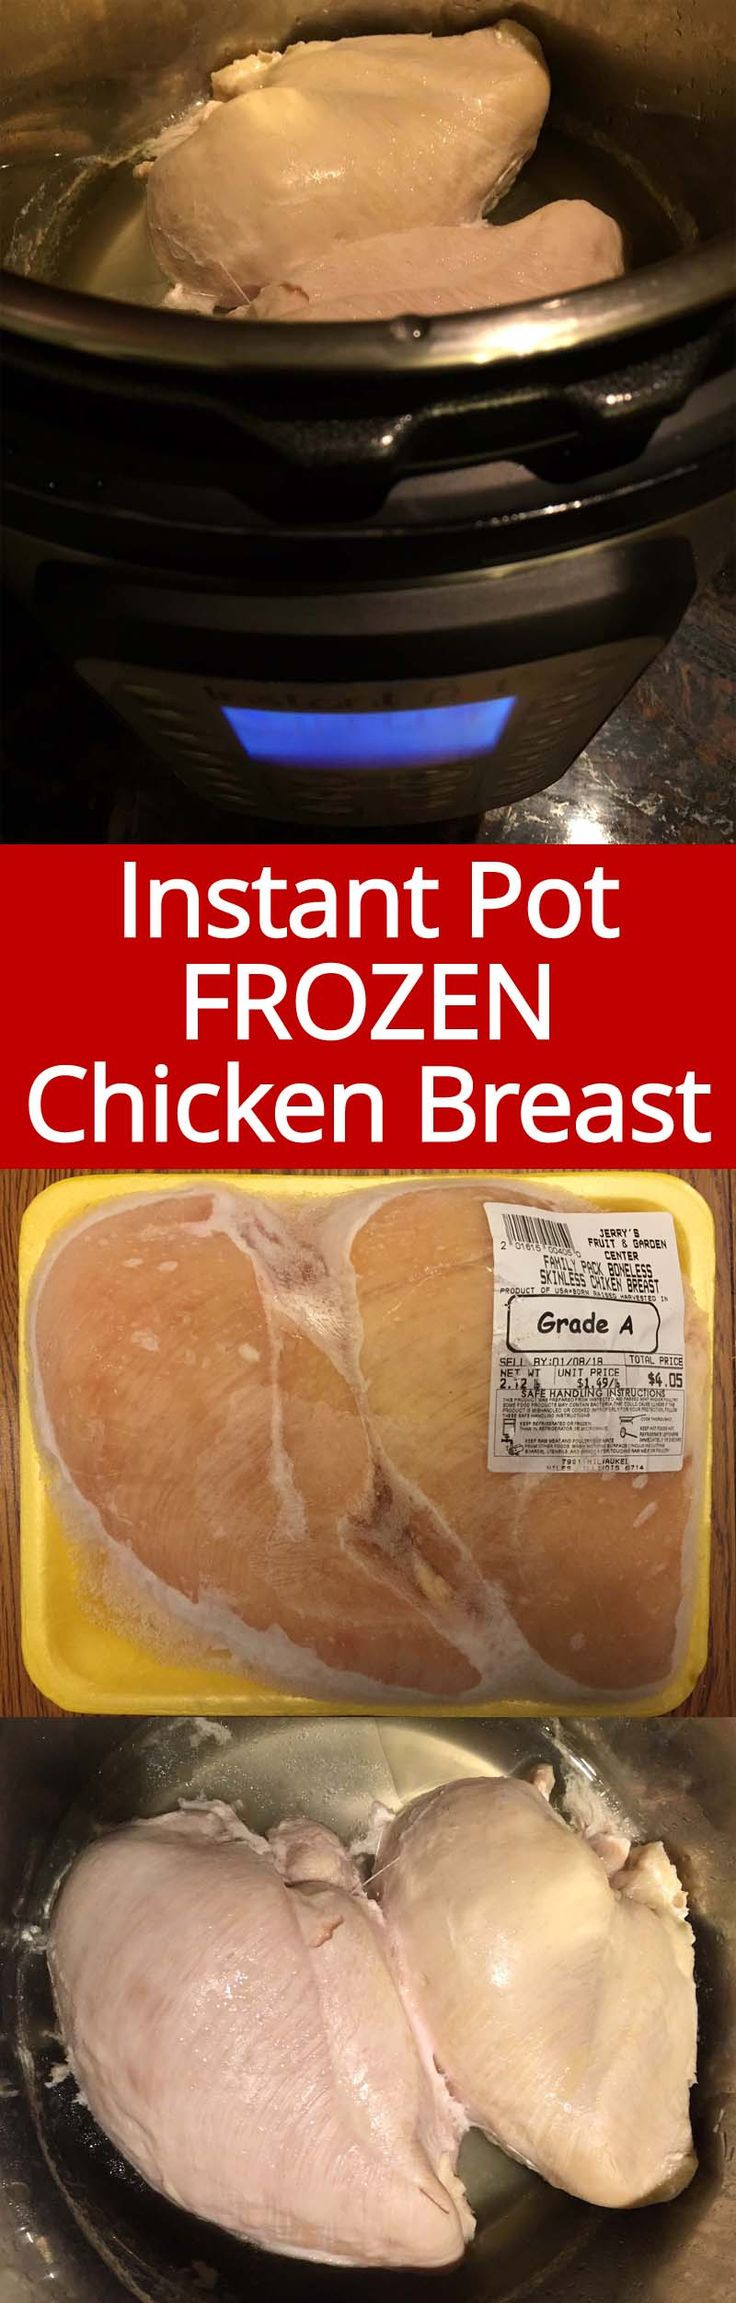 Instant Pot Frozen Chicken Breast Recipes
 Best 25 Chicken breasts ideas on Pinterest